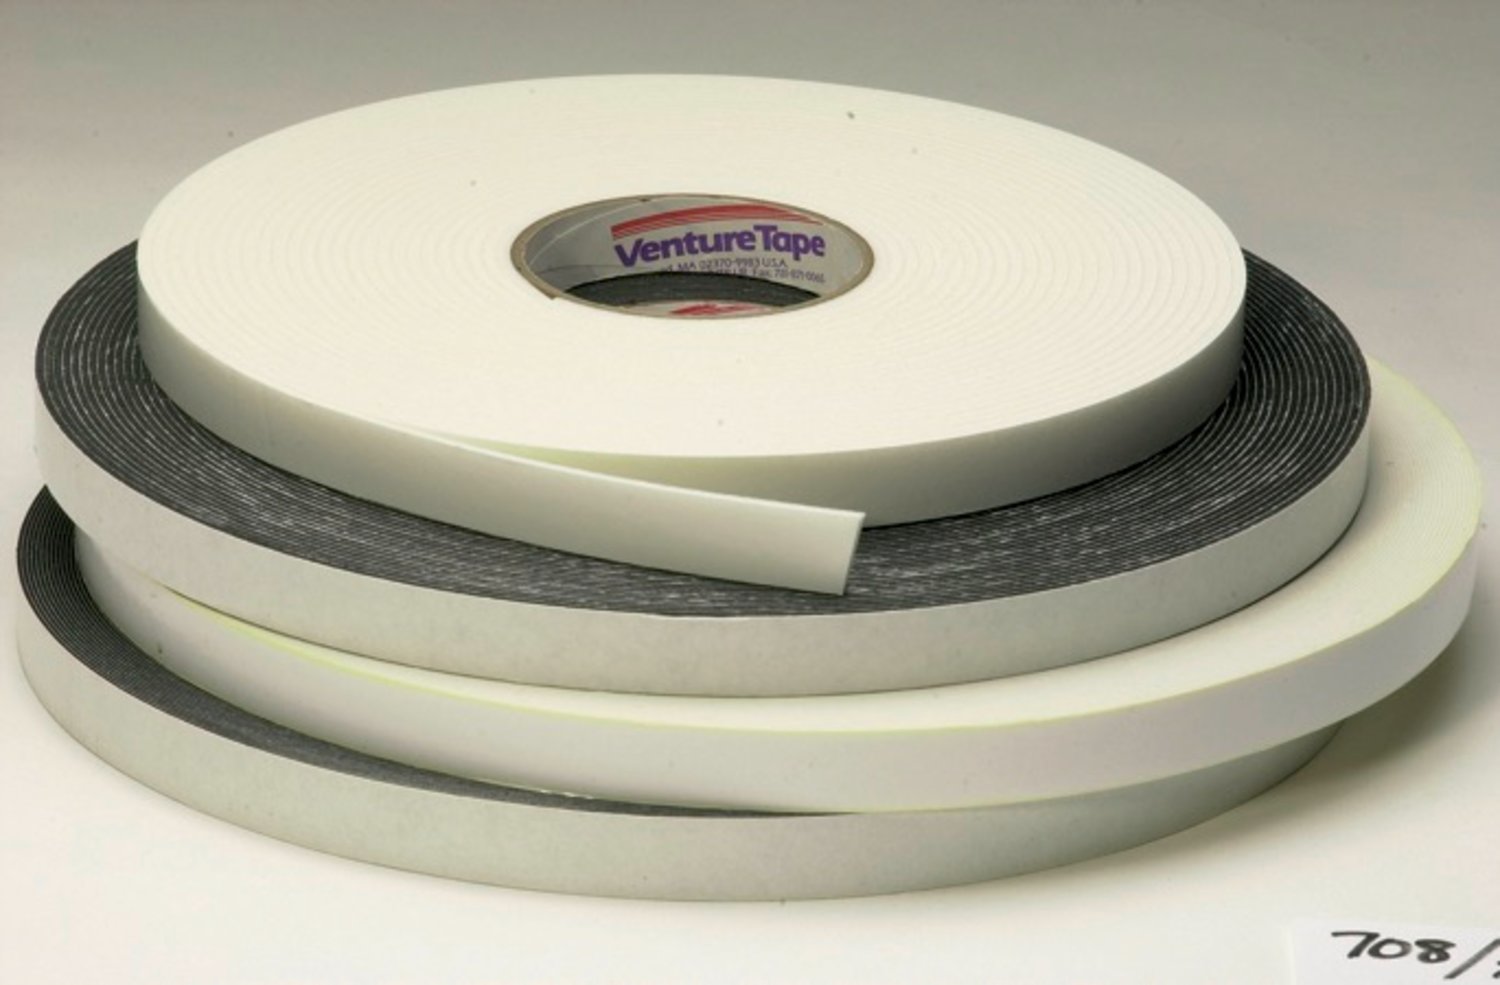 7100043913 - 3M Venture Tape Double Sided Polyethylene Foam Glazing Tape VG708,
White, 1/2 in x 85 ft, 125 mil, 40 rolls per case